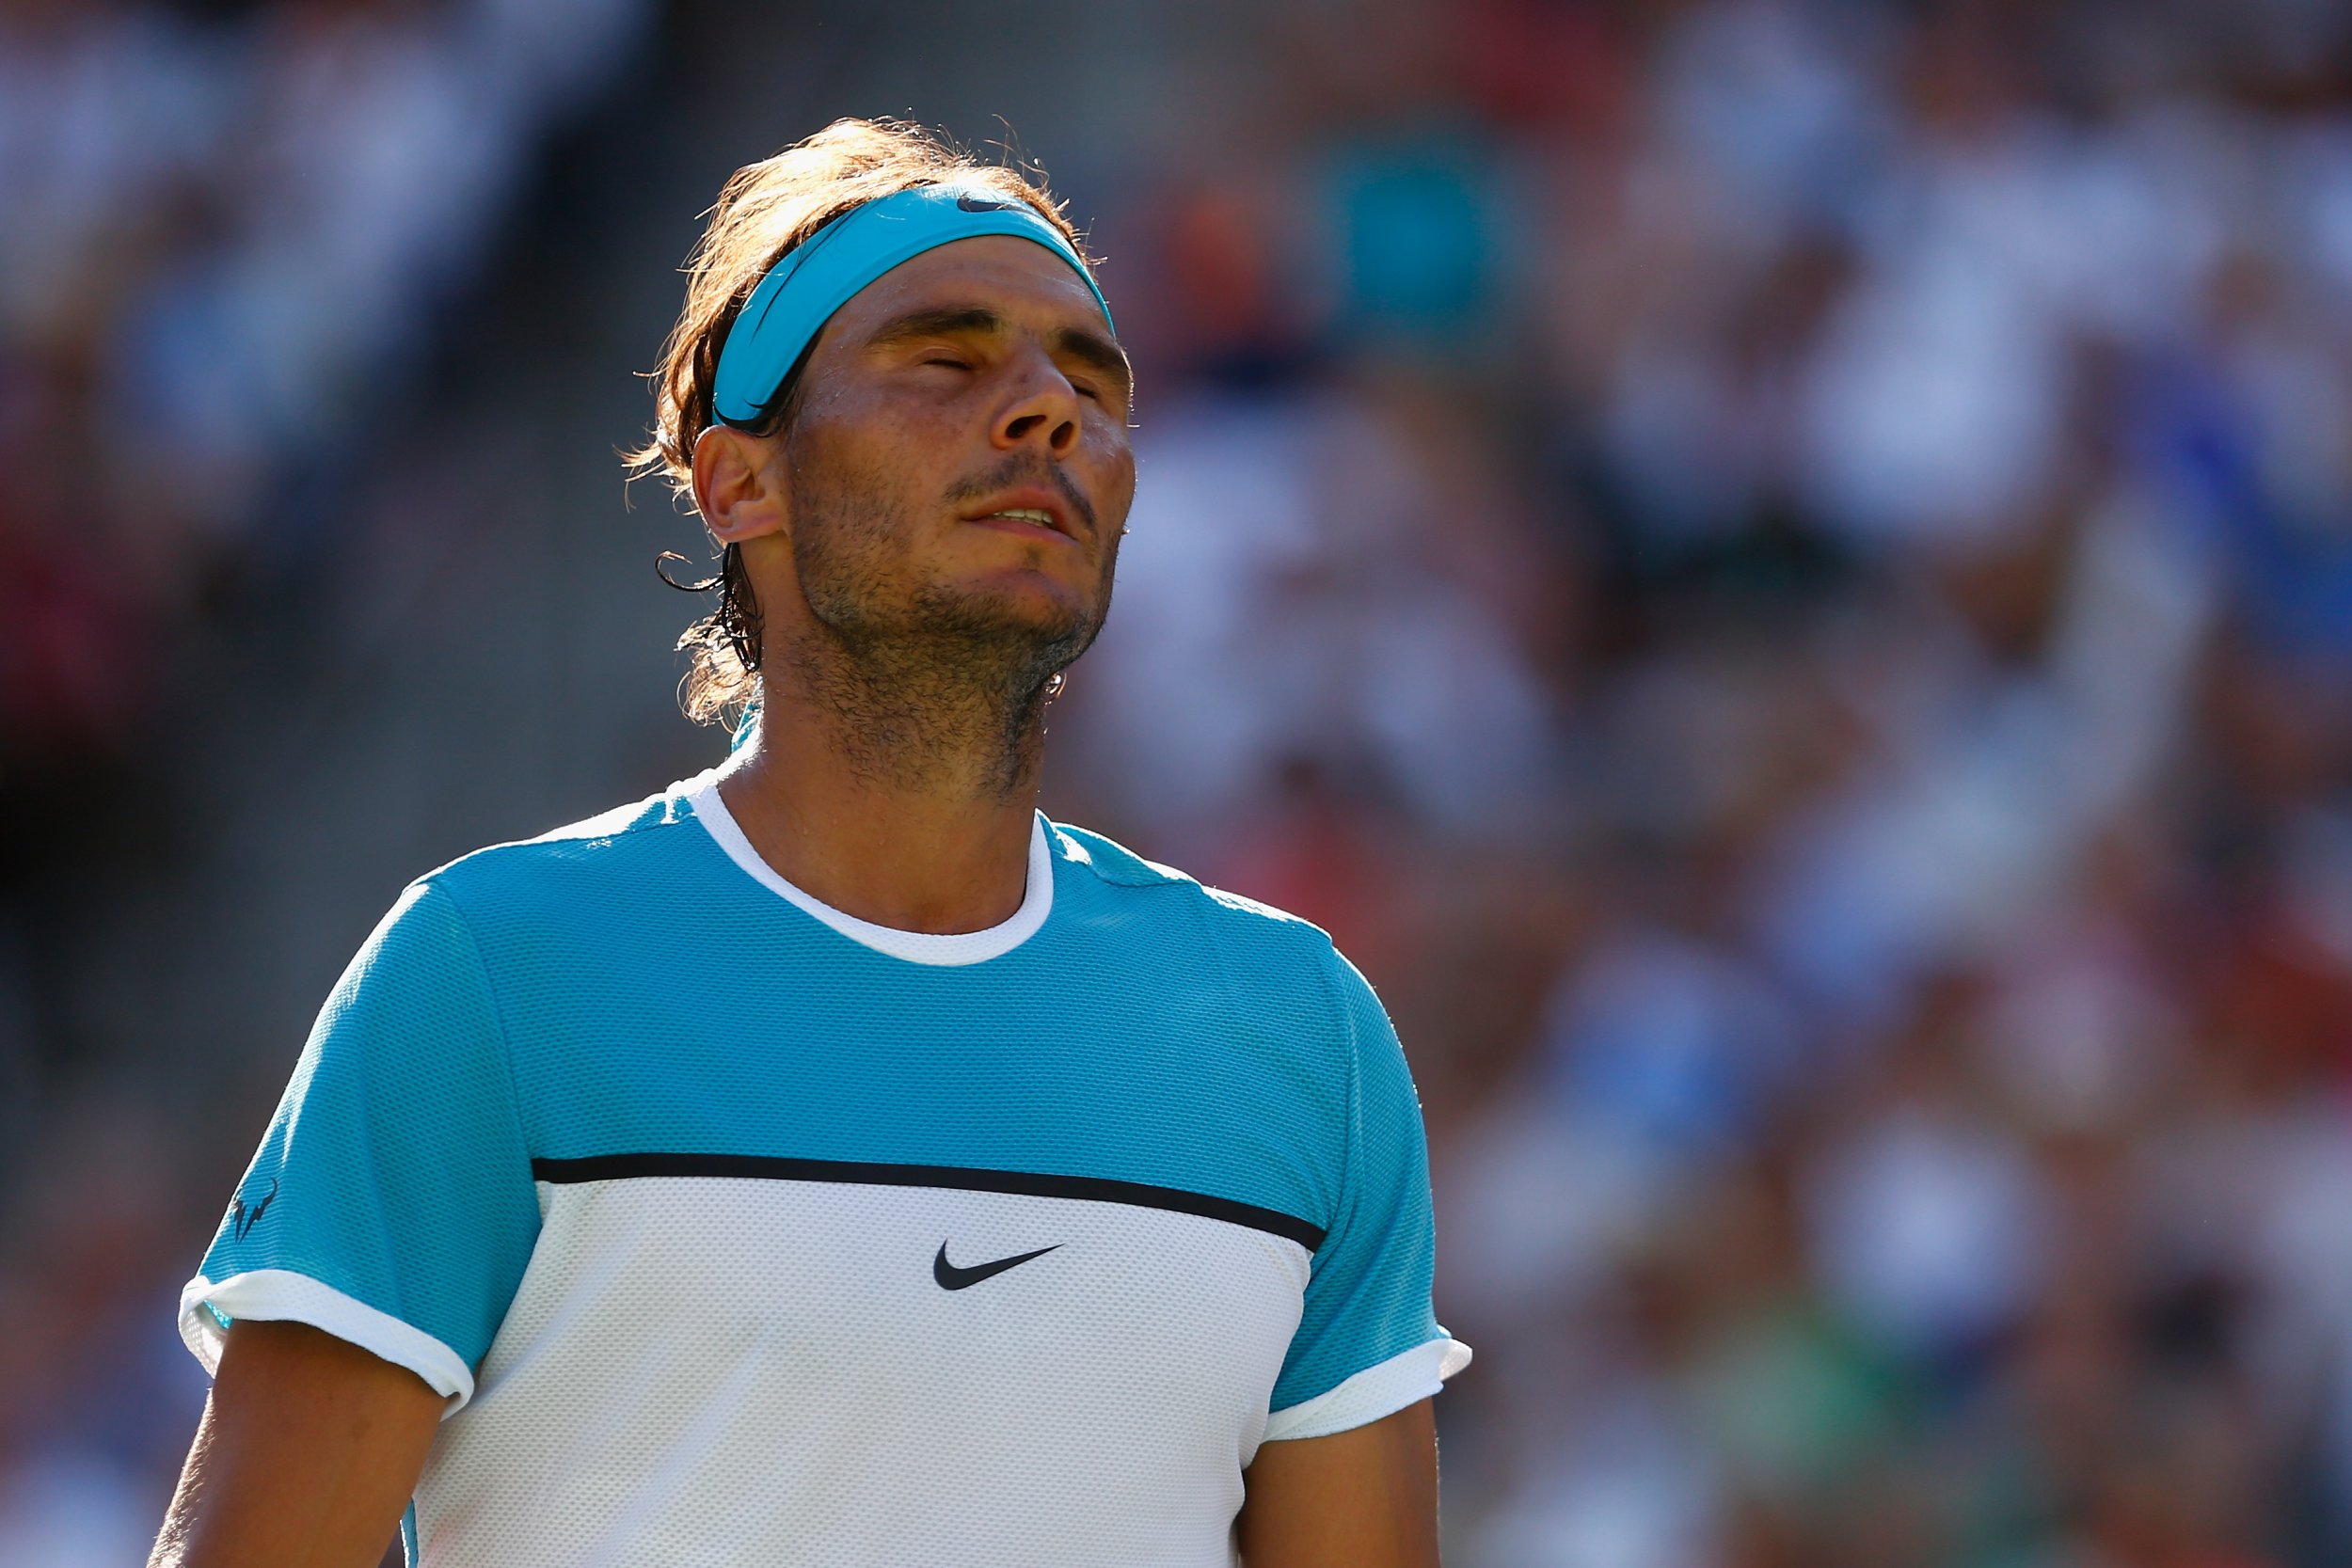 Rafael Nadal Tennis Star Warned After Foul Language During Alexander